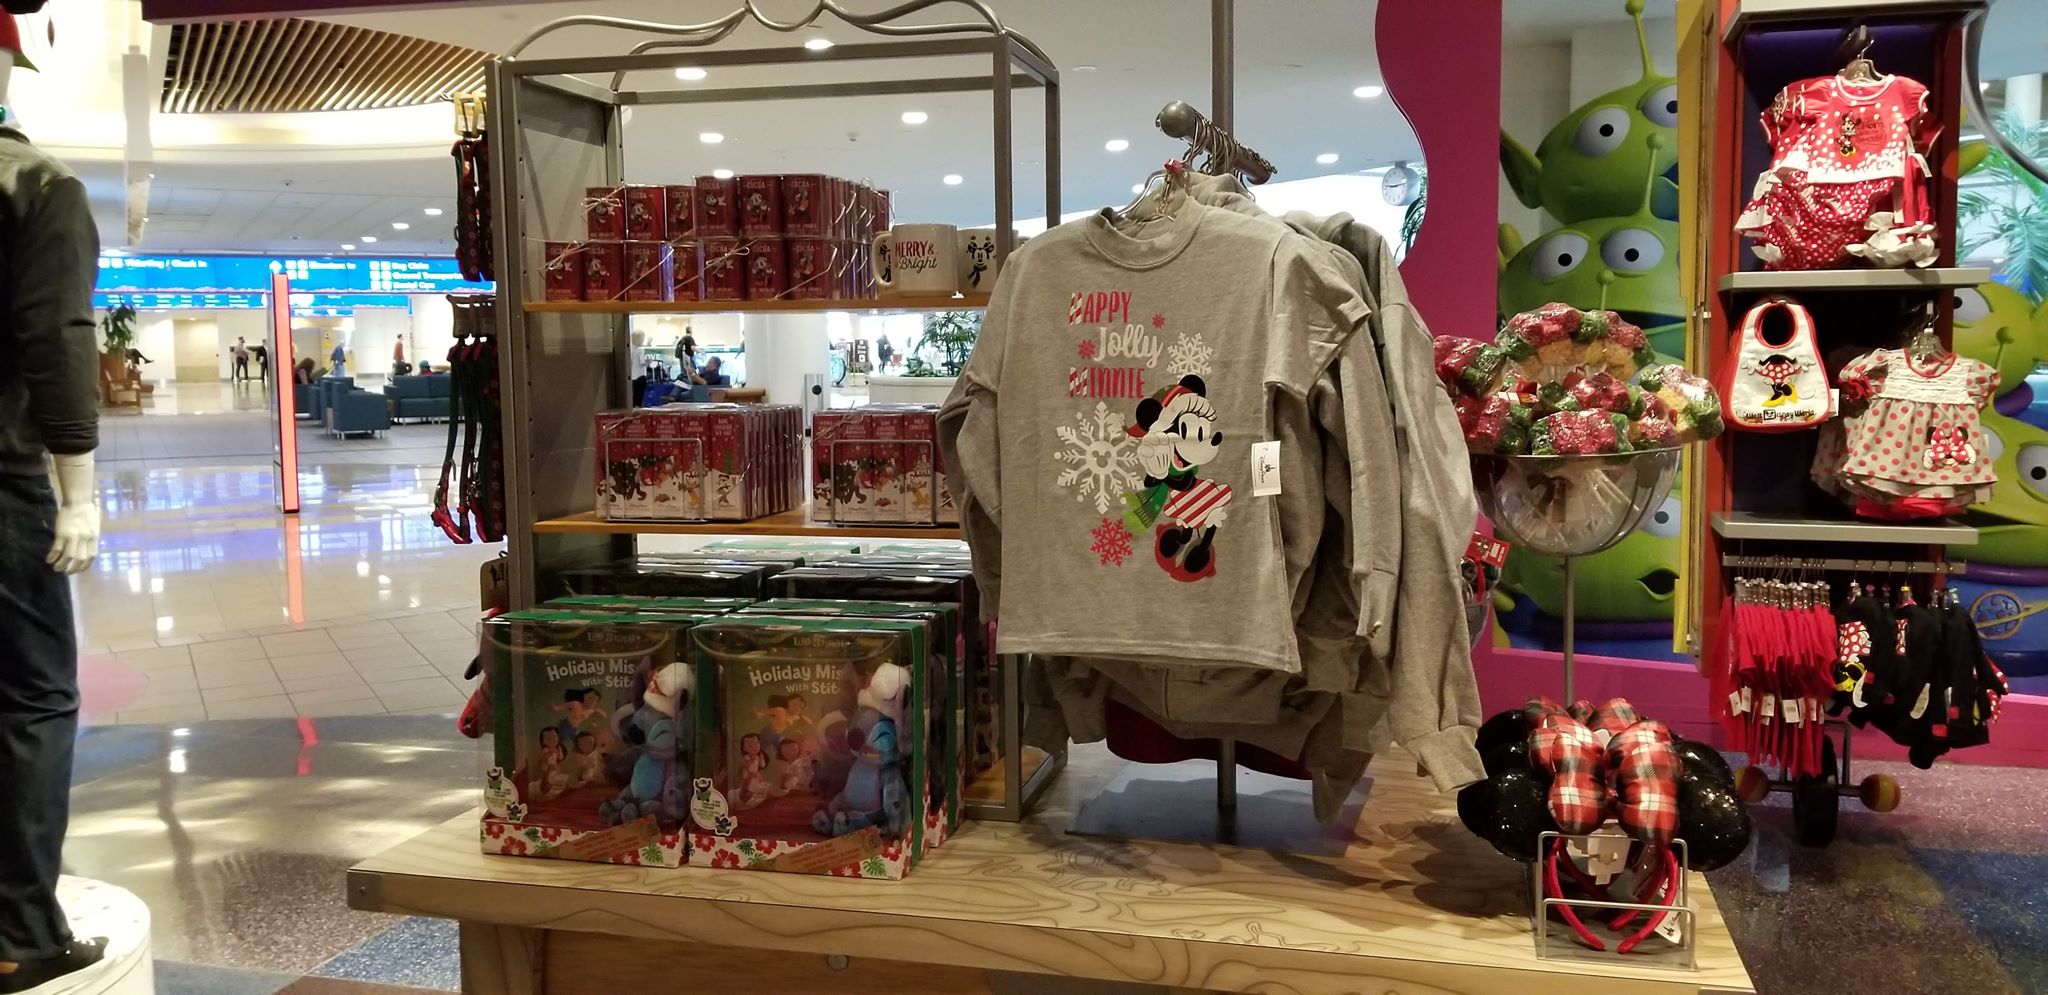 The Earport at Orlando International Airport now has Christmas Merchandise